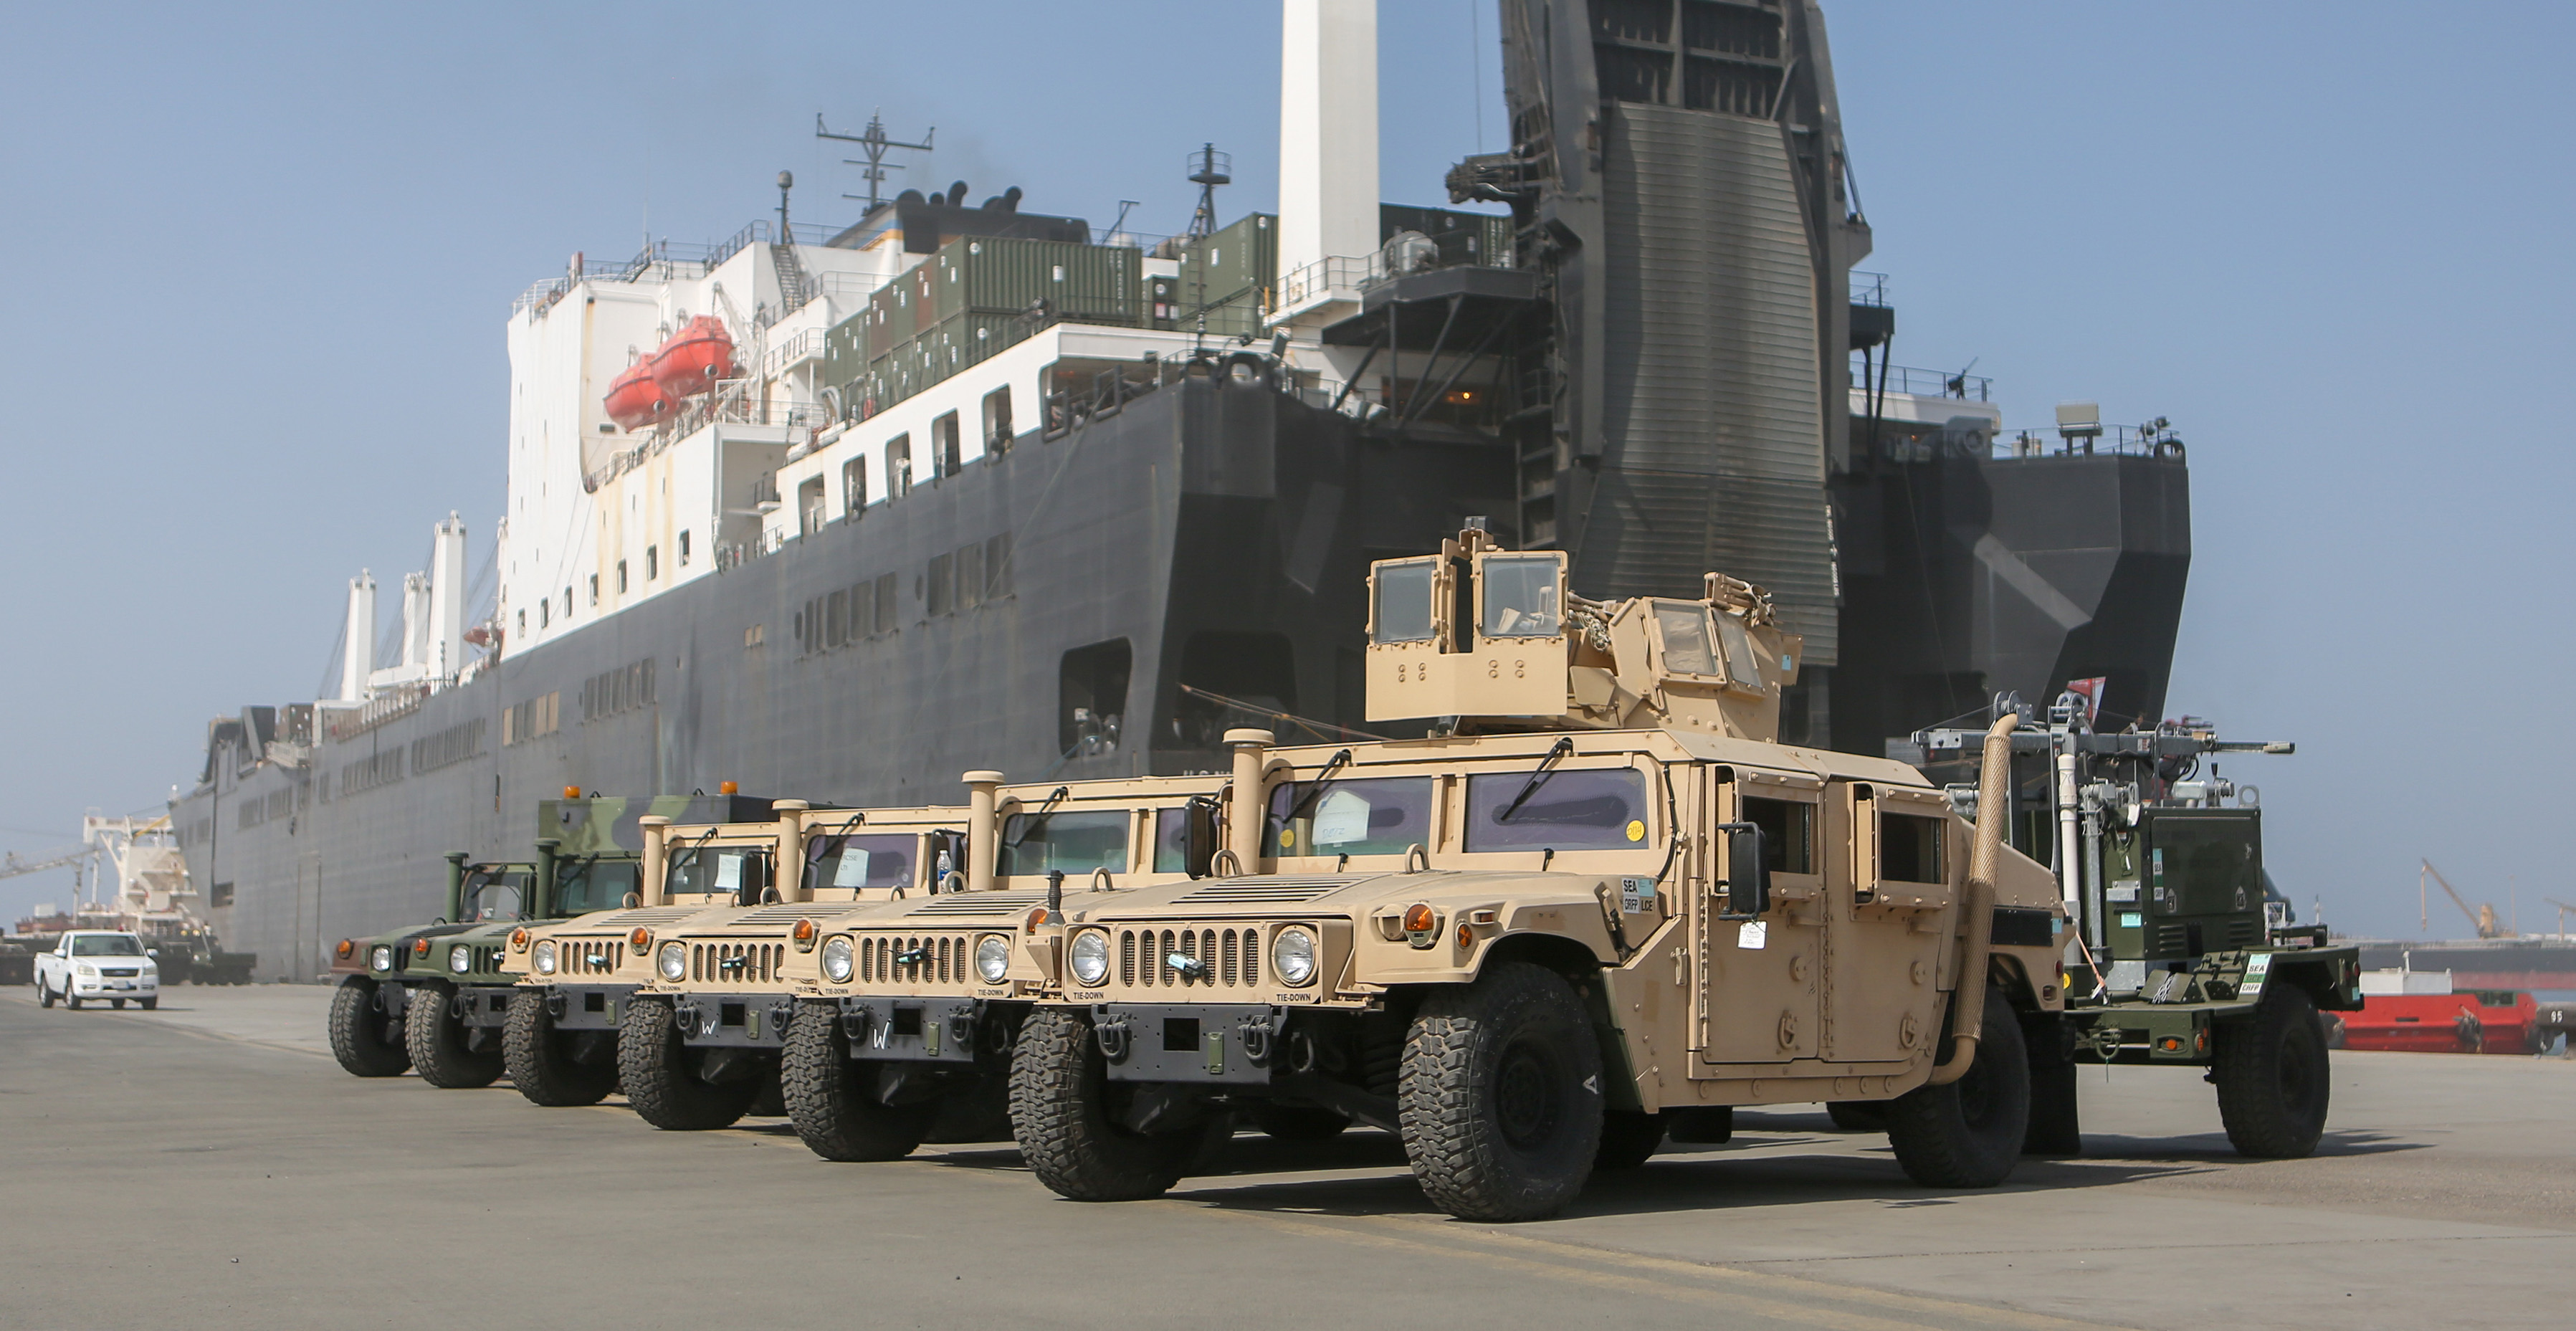 Marine Corps equipment on dock near a transport ship